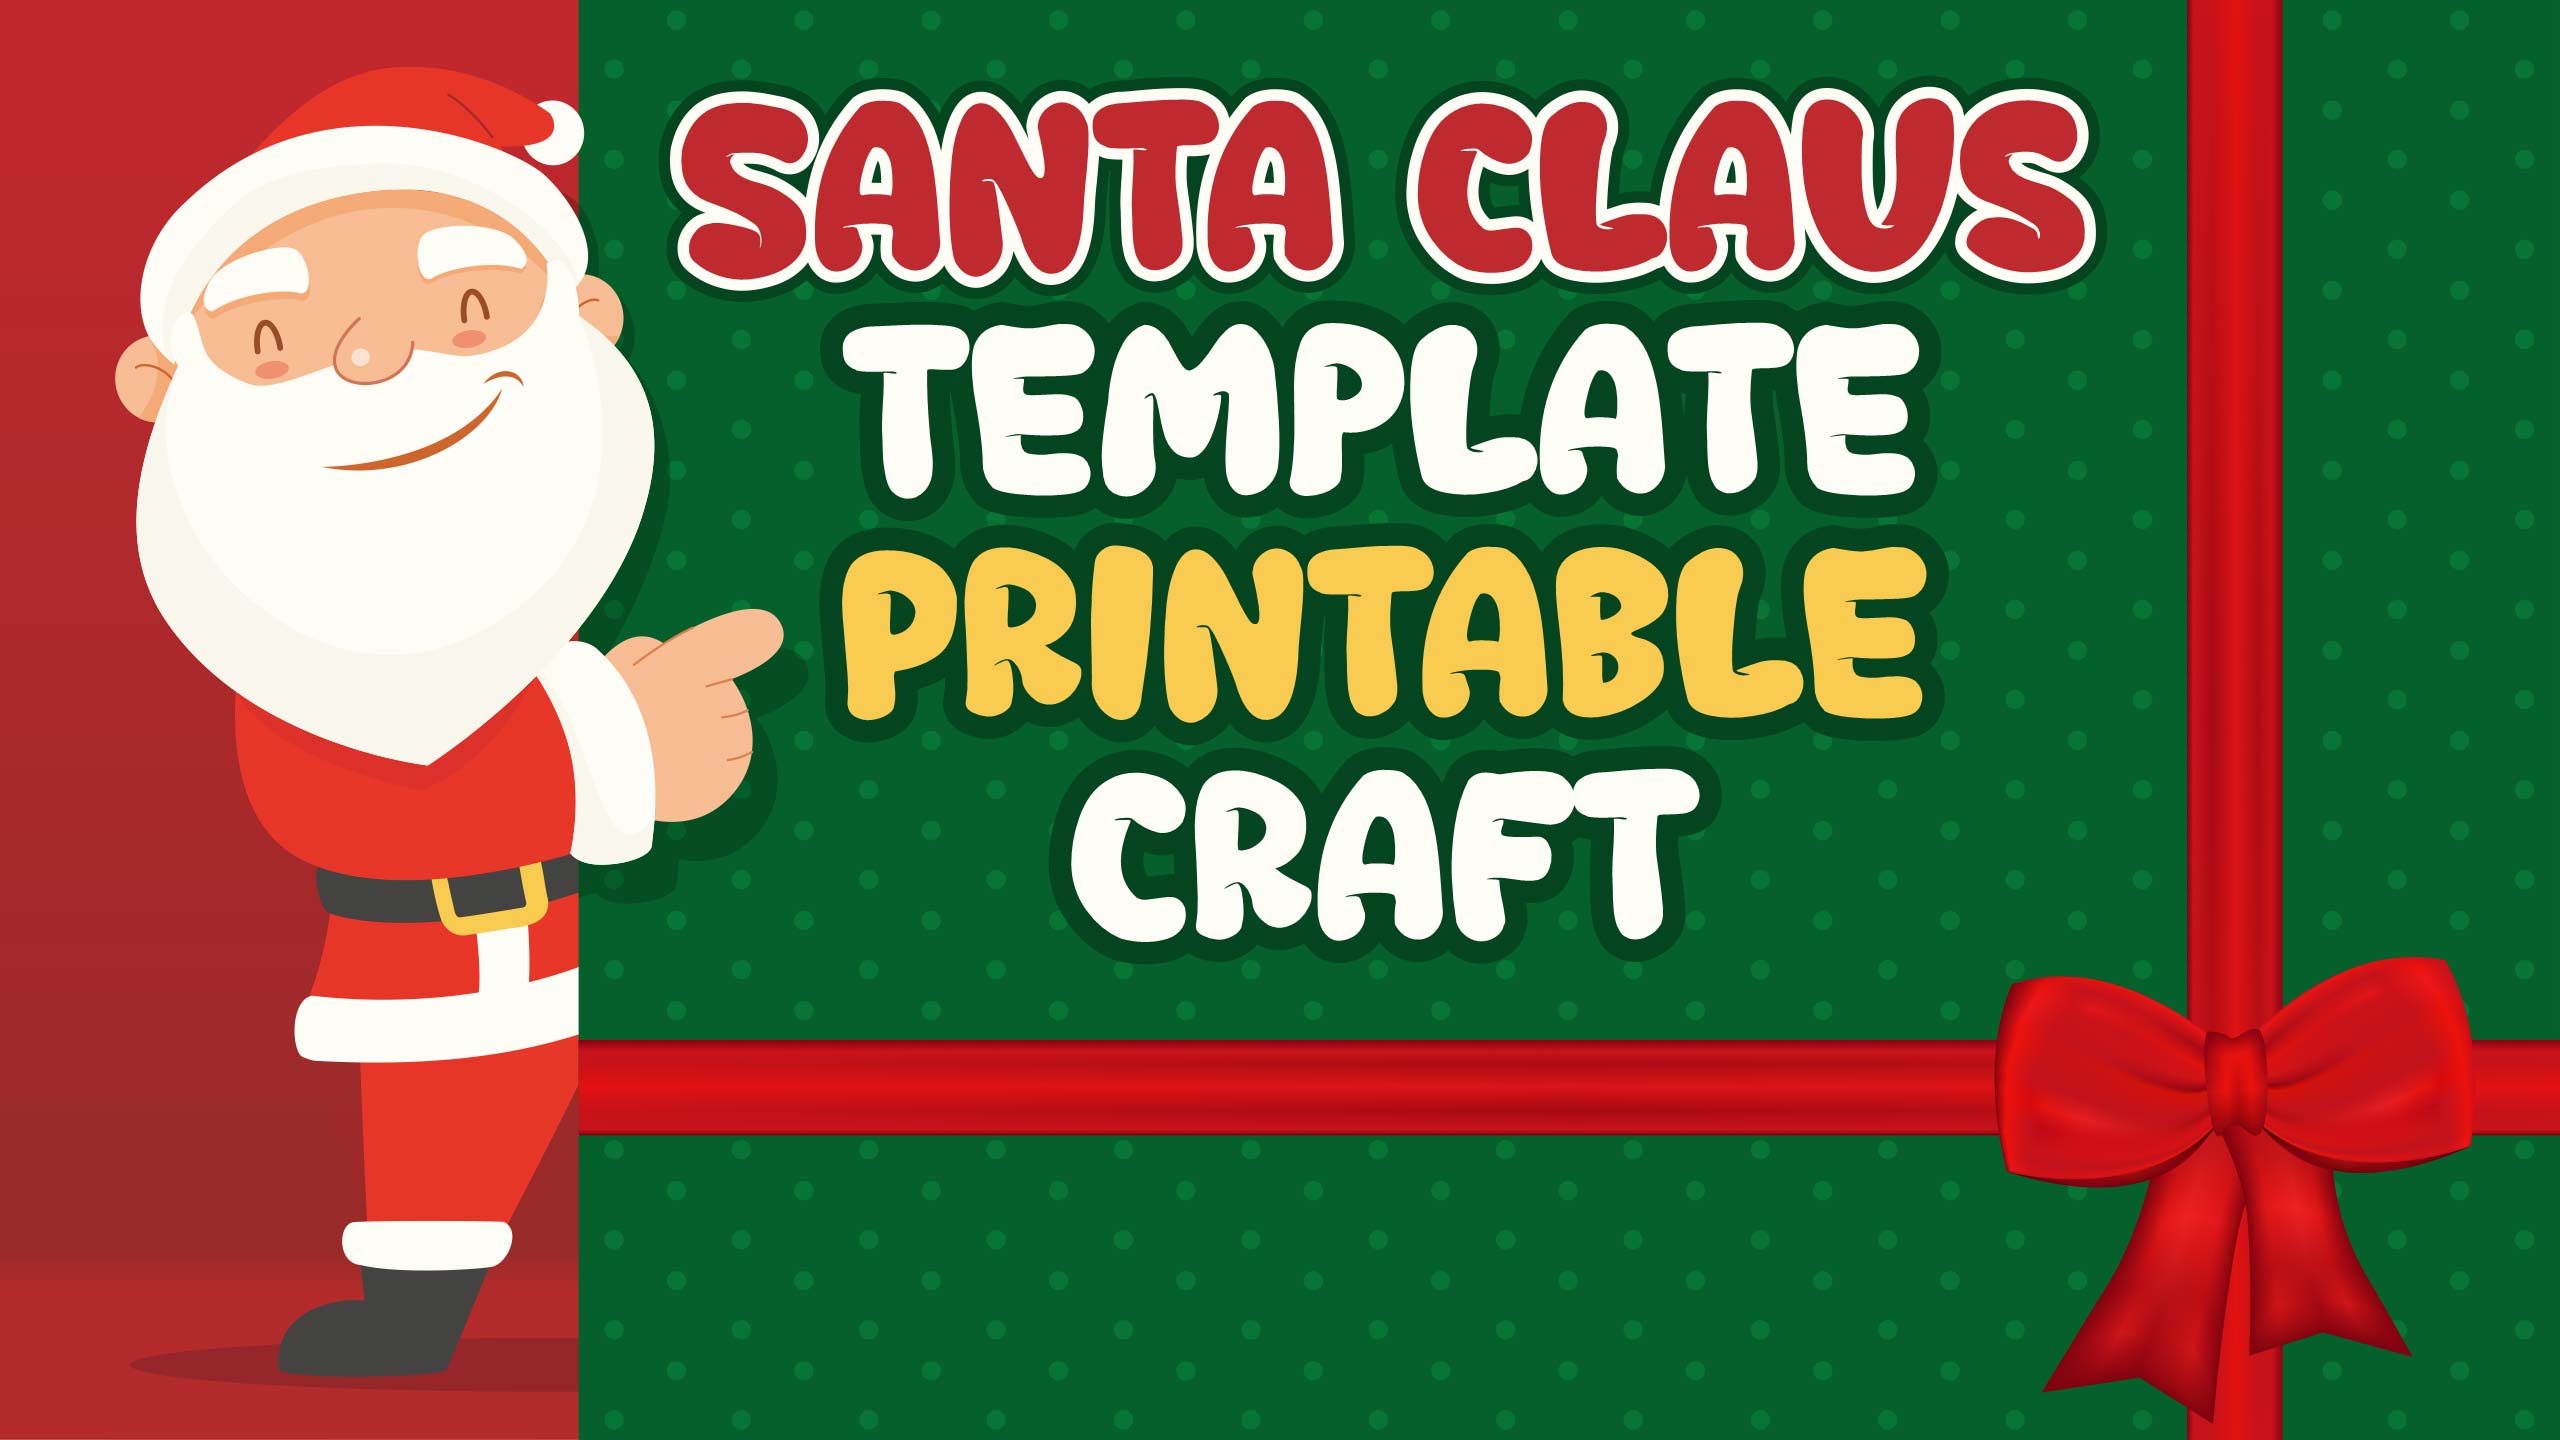 Santa Claus Template Printable Craft